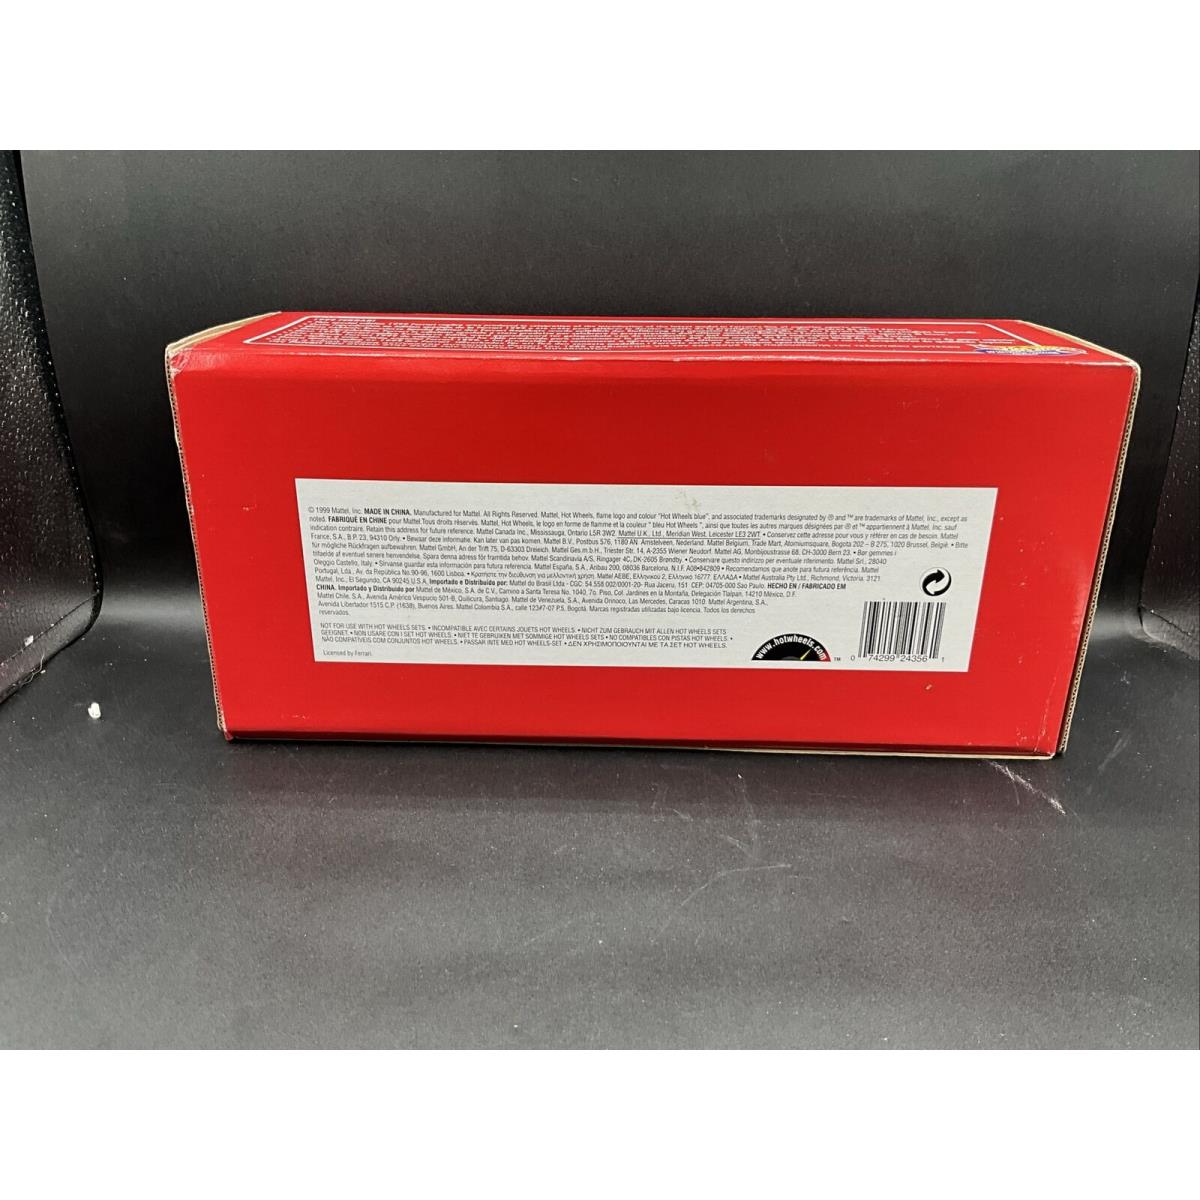 1999 Hot Wheels Ferrari Exclusive Manufacturer 1:18 Mattel 24356 Red Box